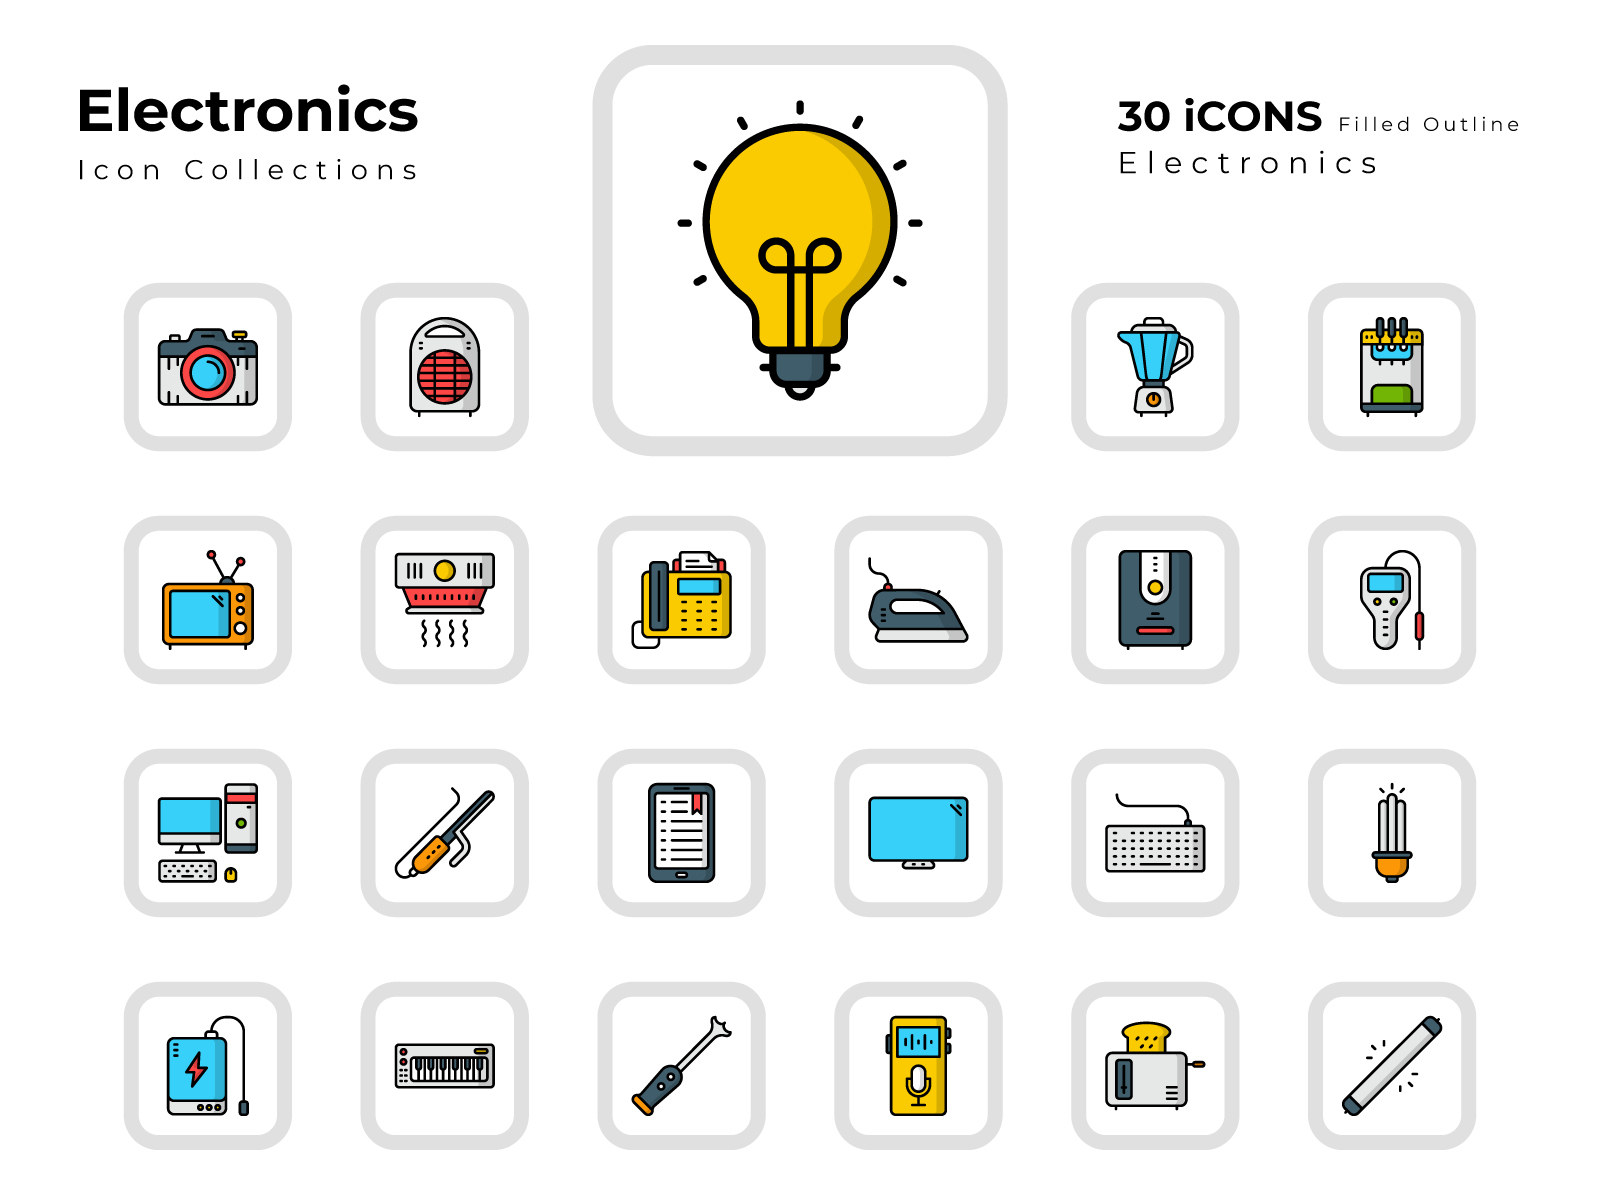 Steuerung - Kostenlose elektronik Icons